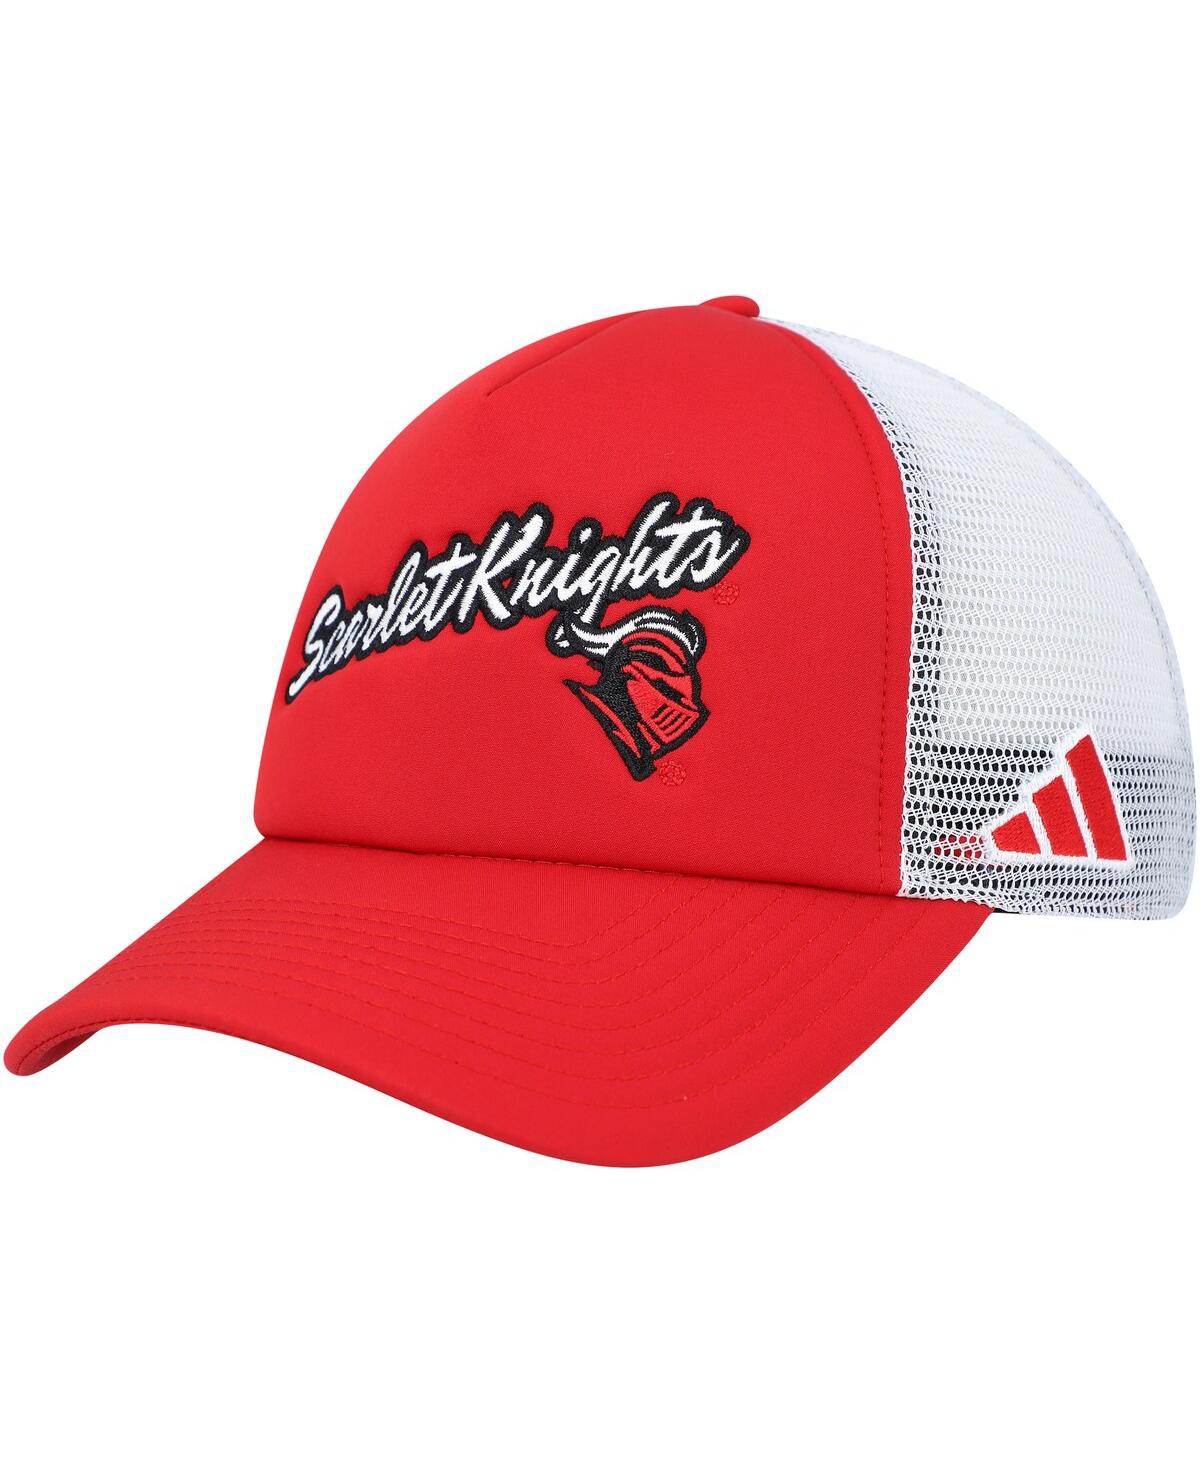 Shop Adidas Originals Men's Adidas Scarlet Rutgers Scarlet Knights Script Trucker Snapback Hat